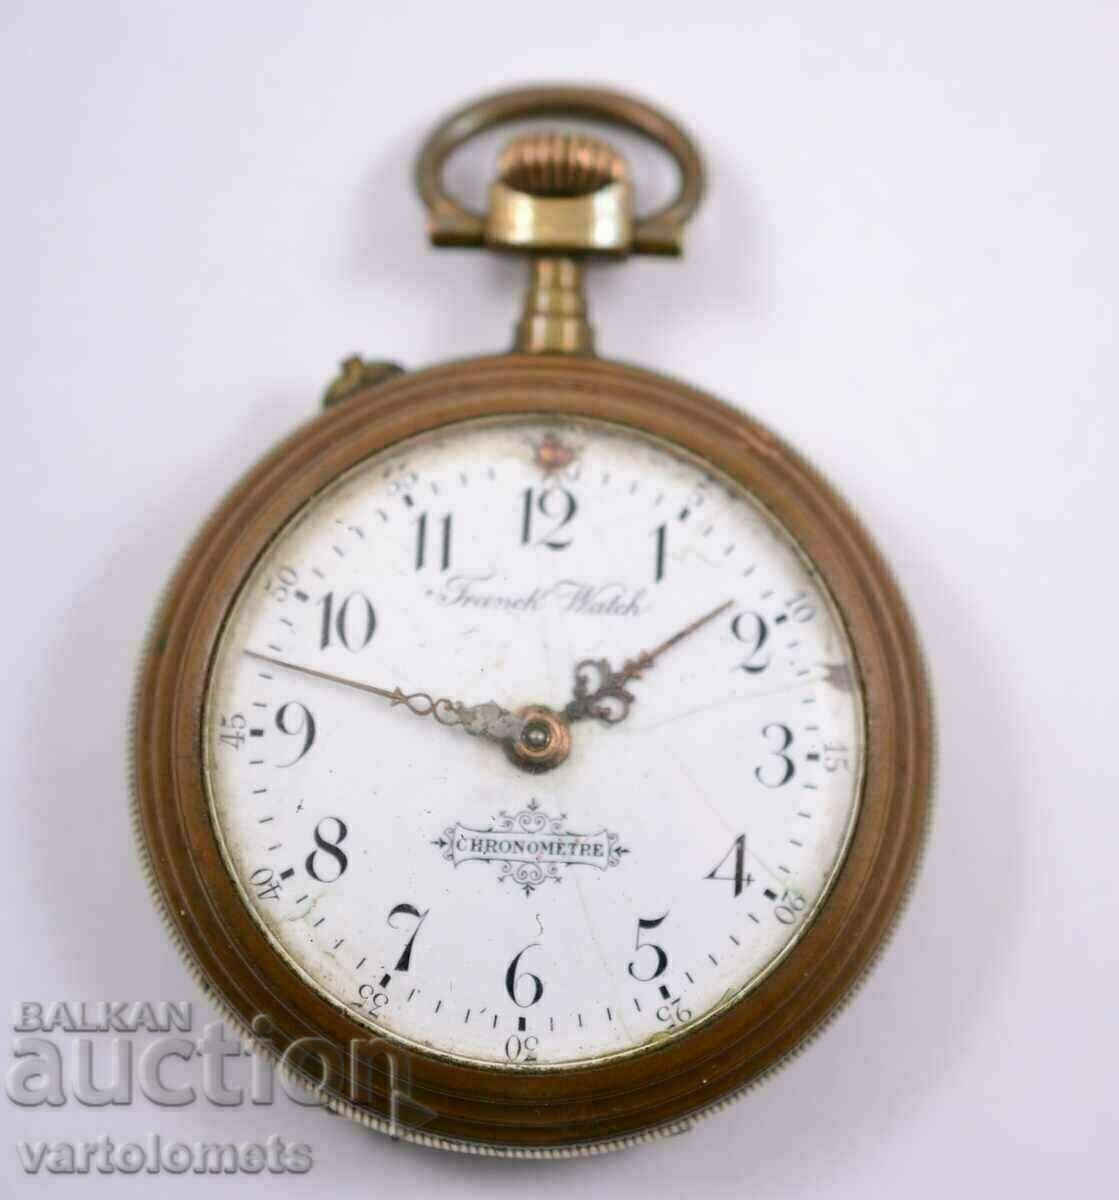 Antique pocket watch - not working